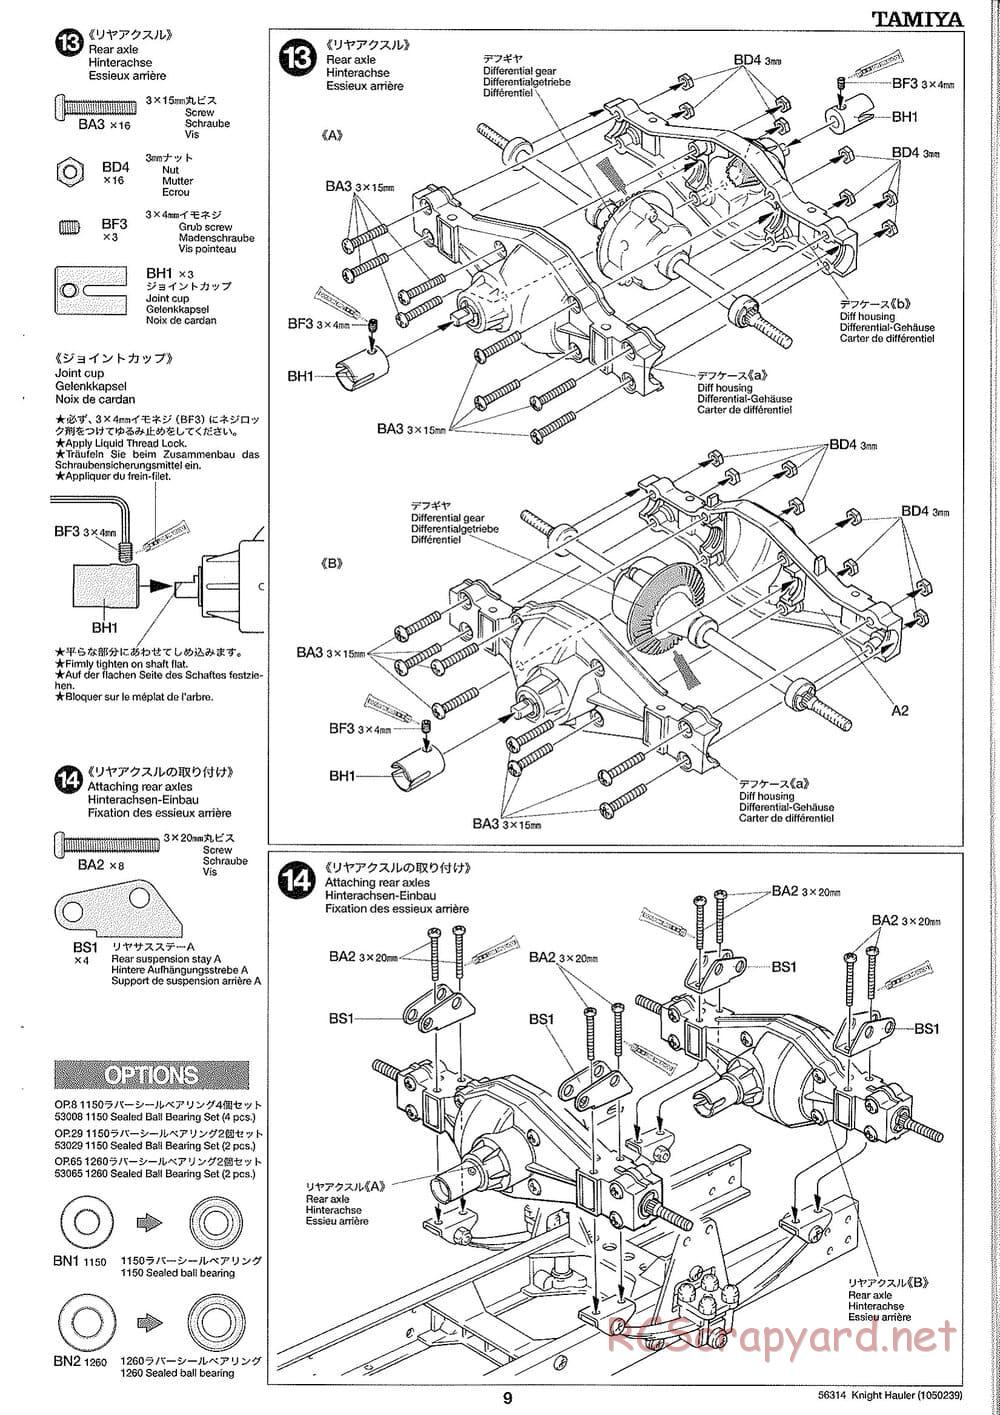 Tamiya - Knight Hauler Tractor Truck Chassis - Manual - Page 9